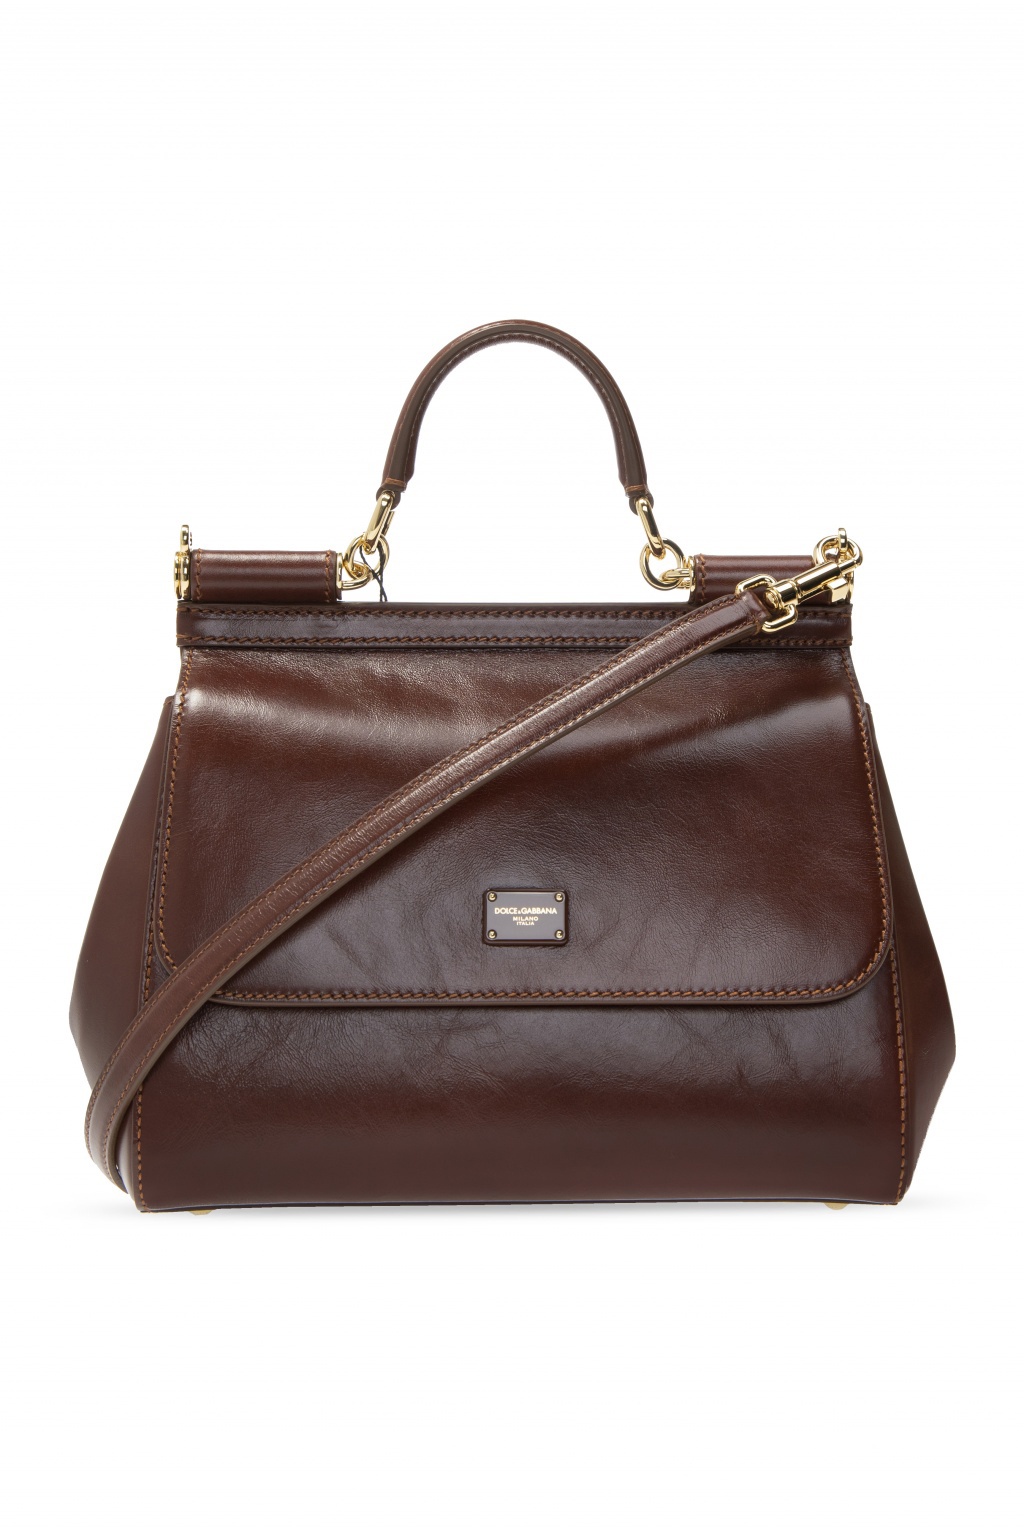 DOLCE & GABBANA  Bags, Shoulder bag women, Leather